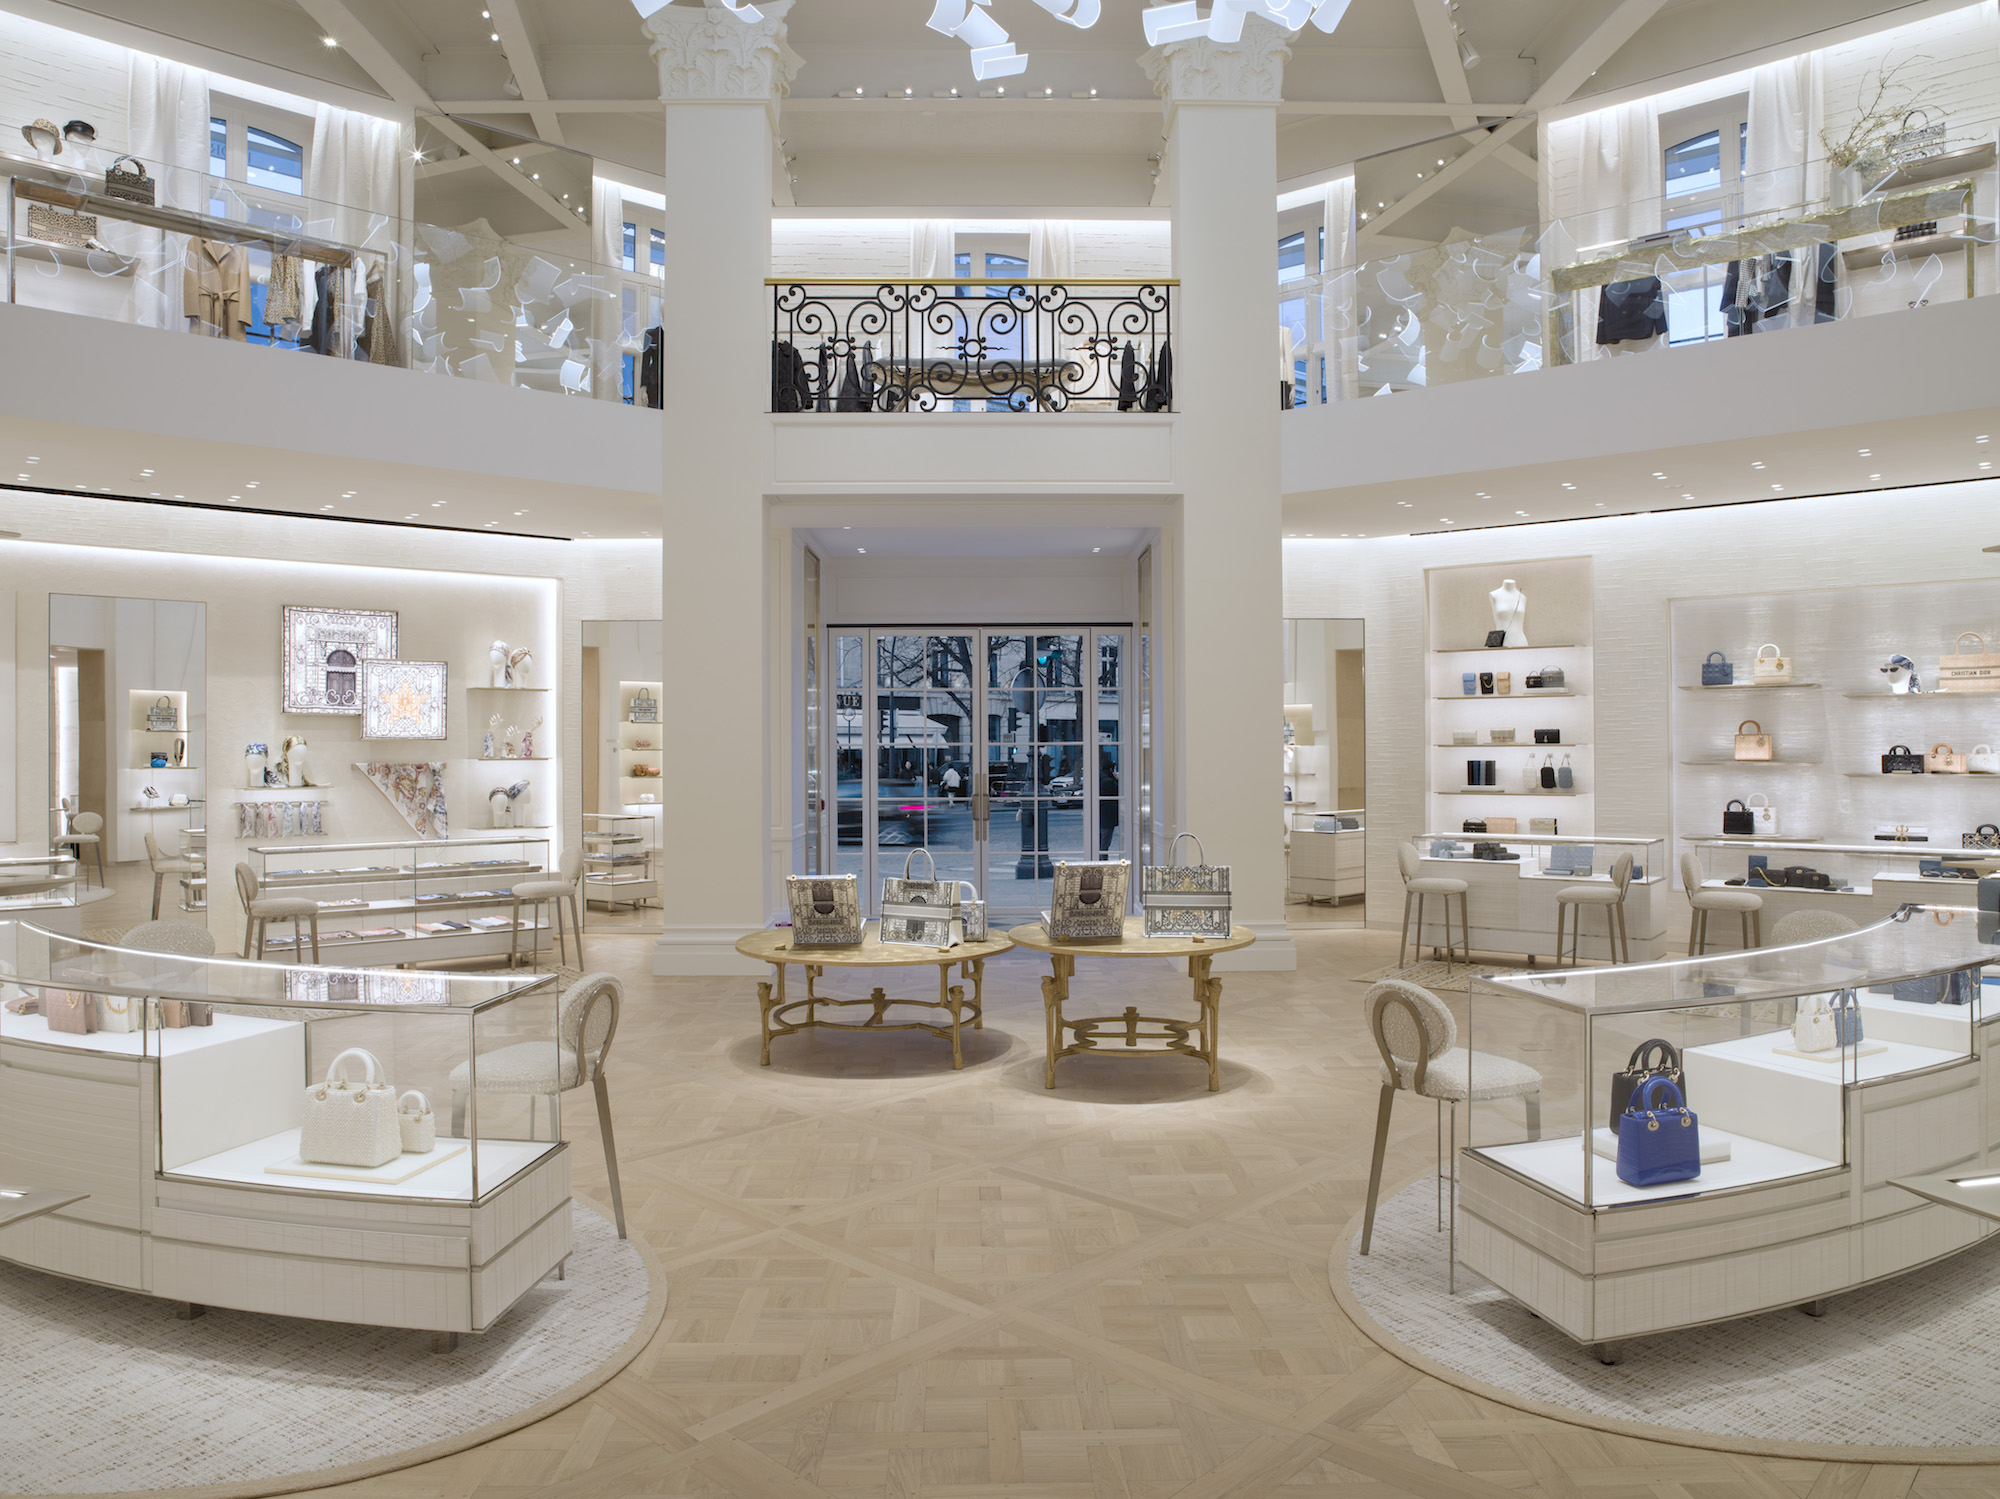 Dior Store in Paris New Retail Concept